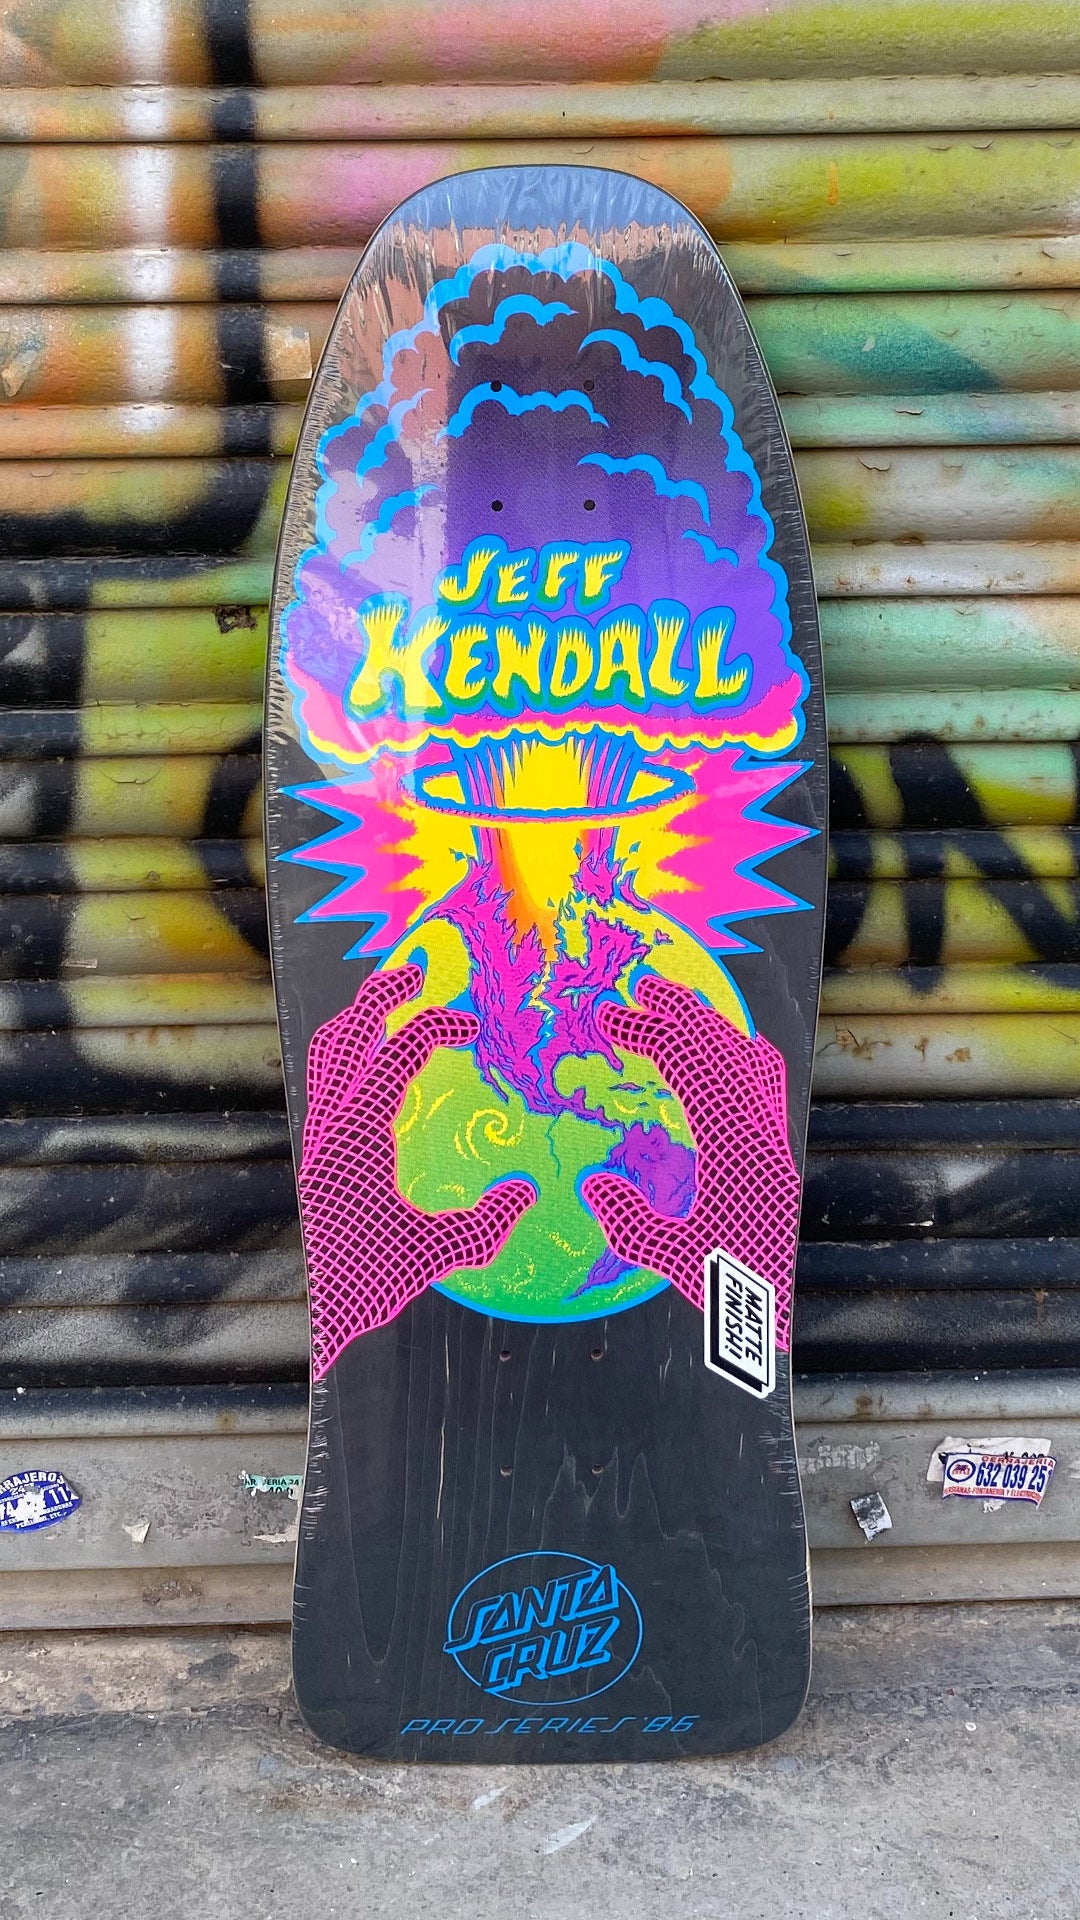 Santa Cruz Kendall End of The World 10.0 Reissue Skateboard Deck - Tabla Skate Tablas Santa Cruz Skateboards 